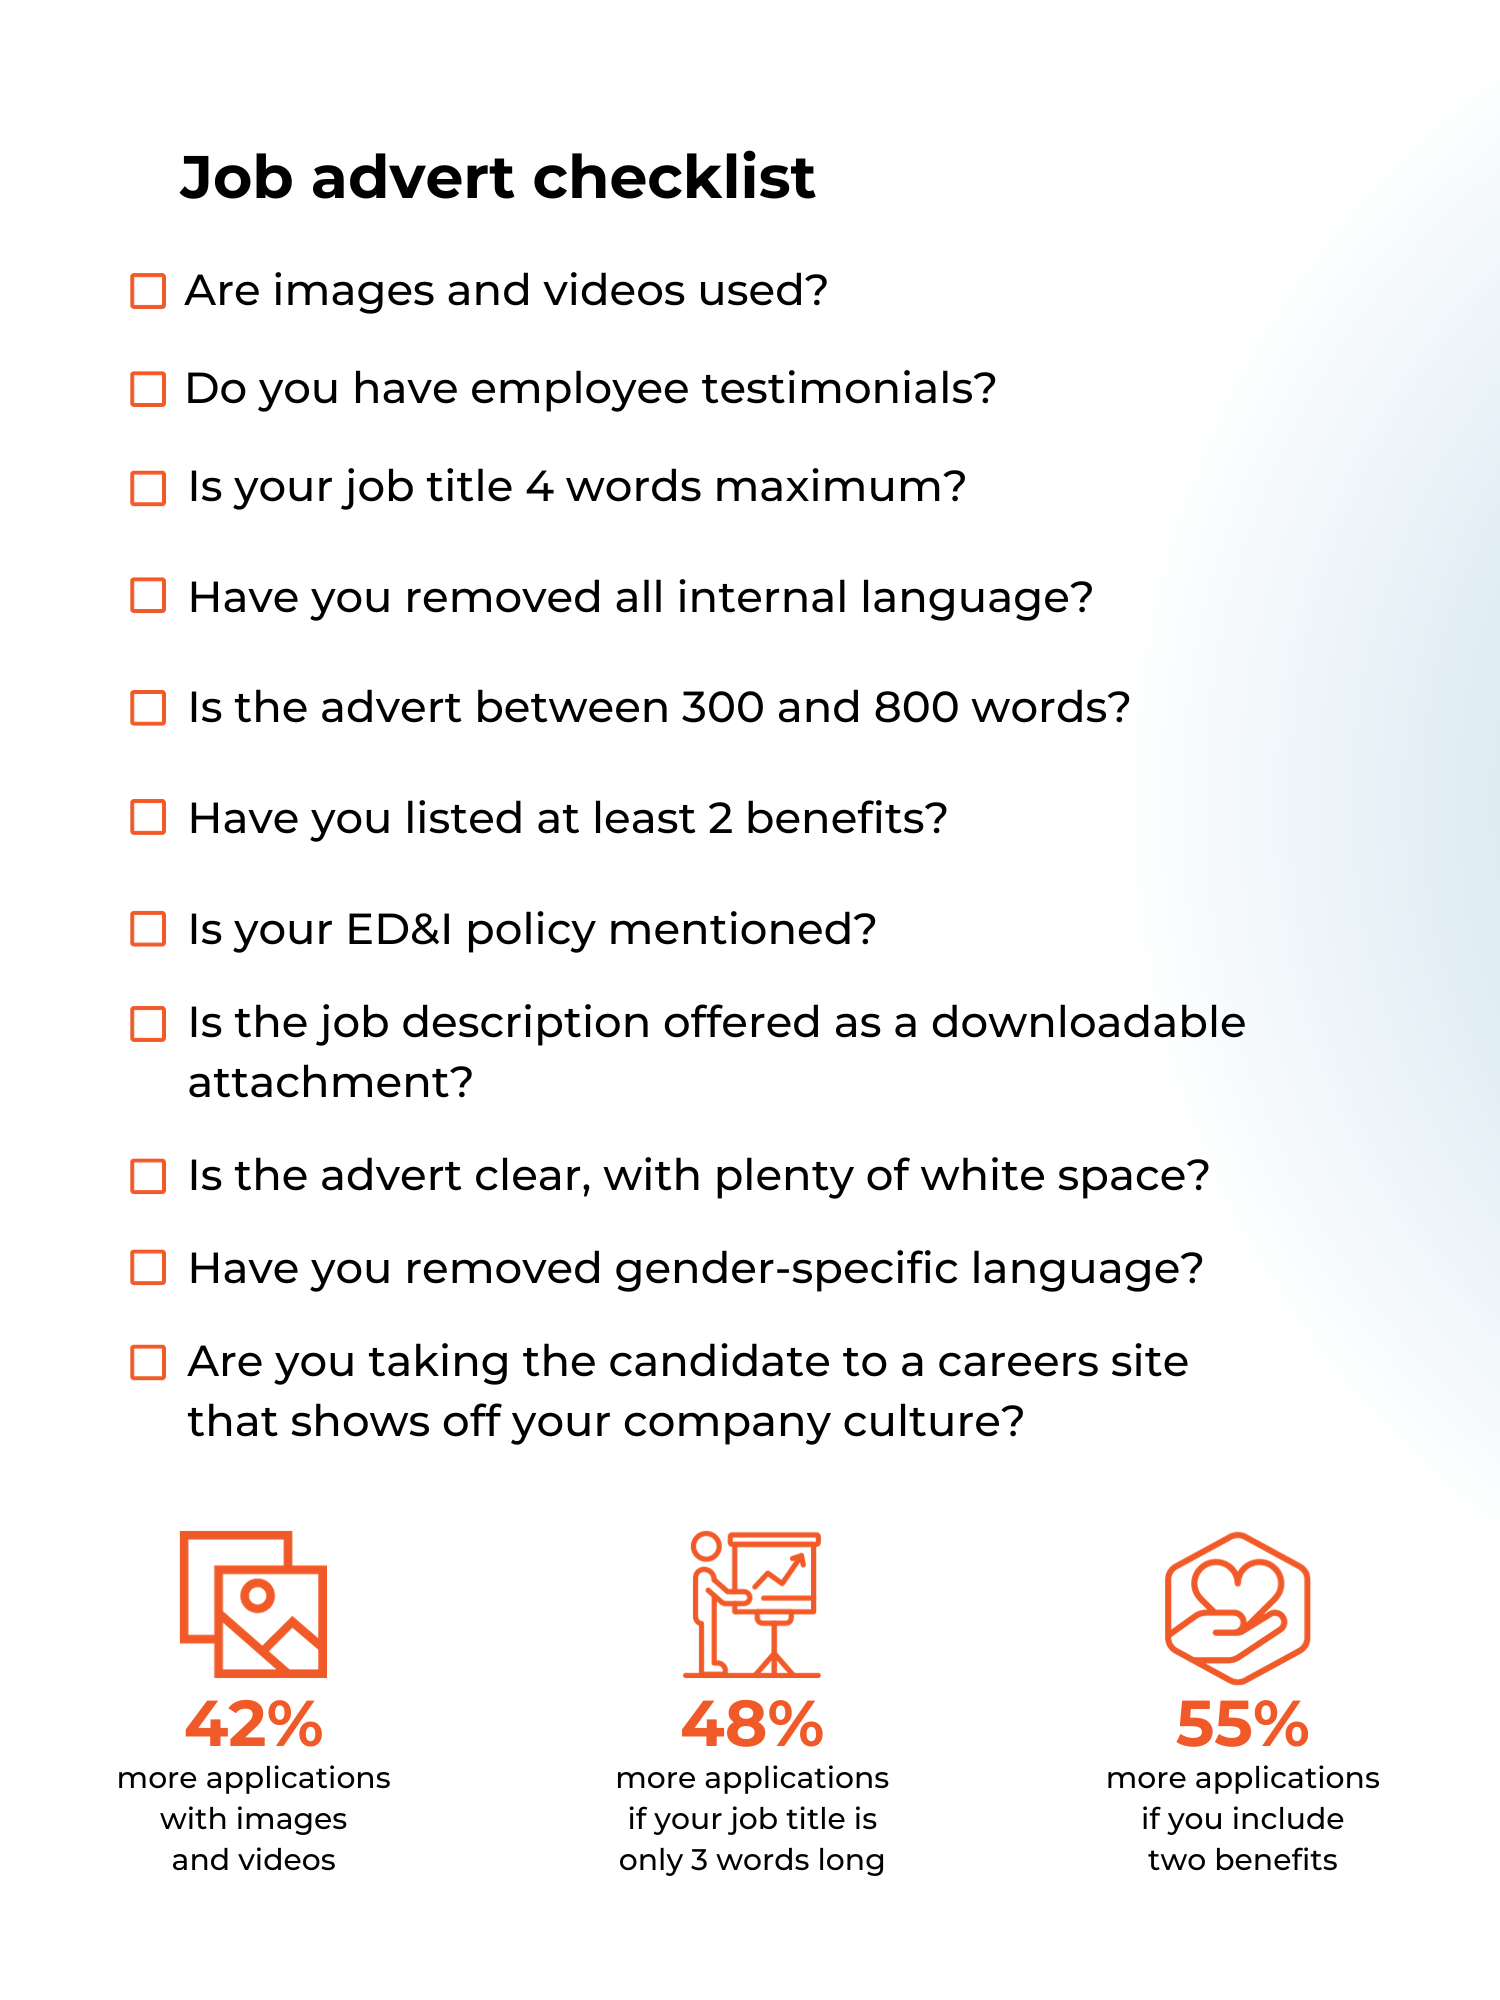 Job Advert Checklist Jan 24